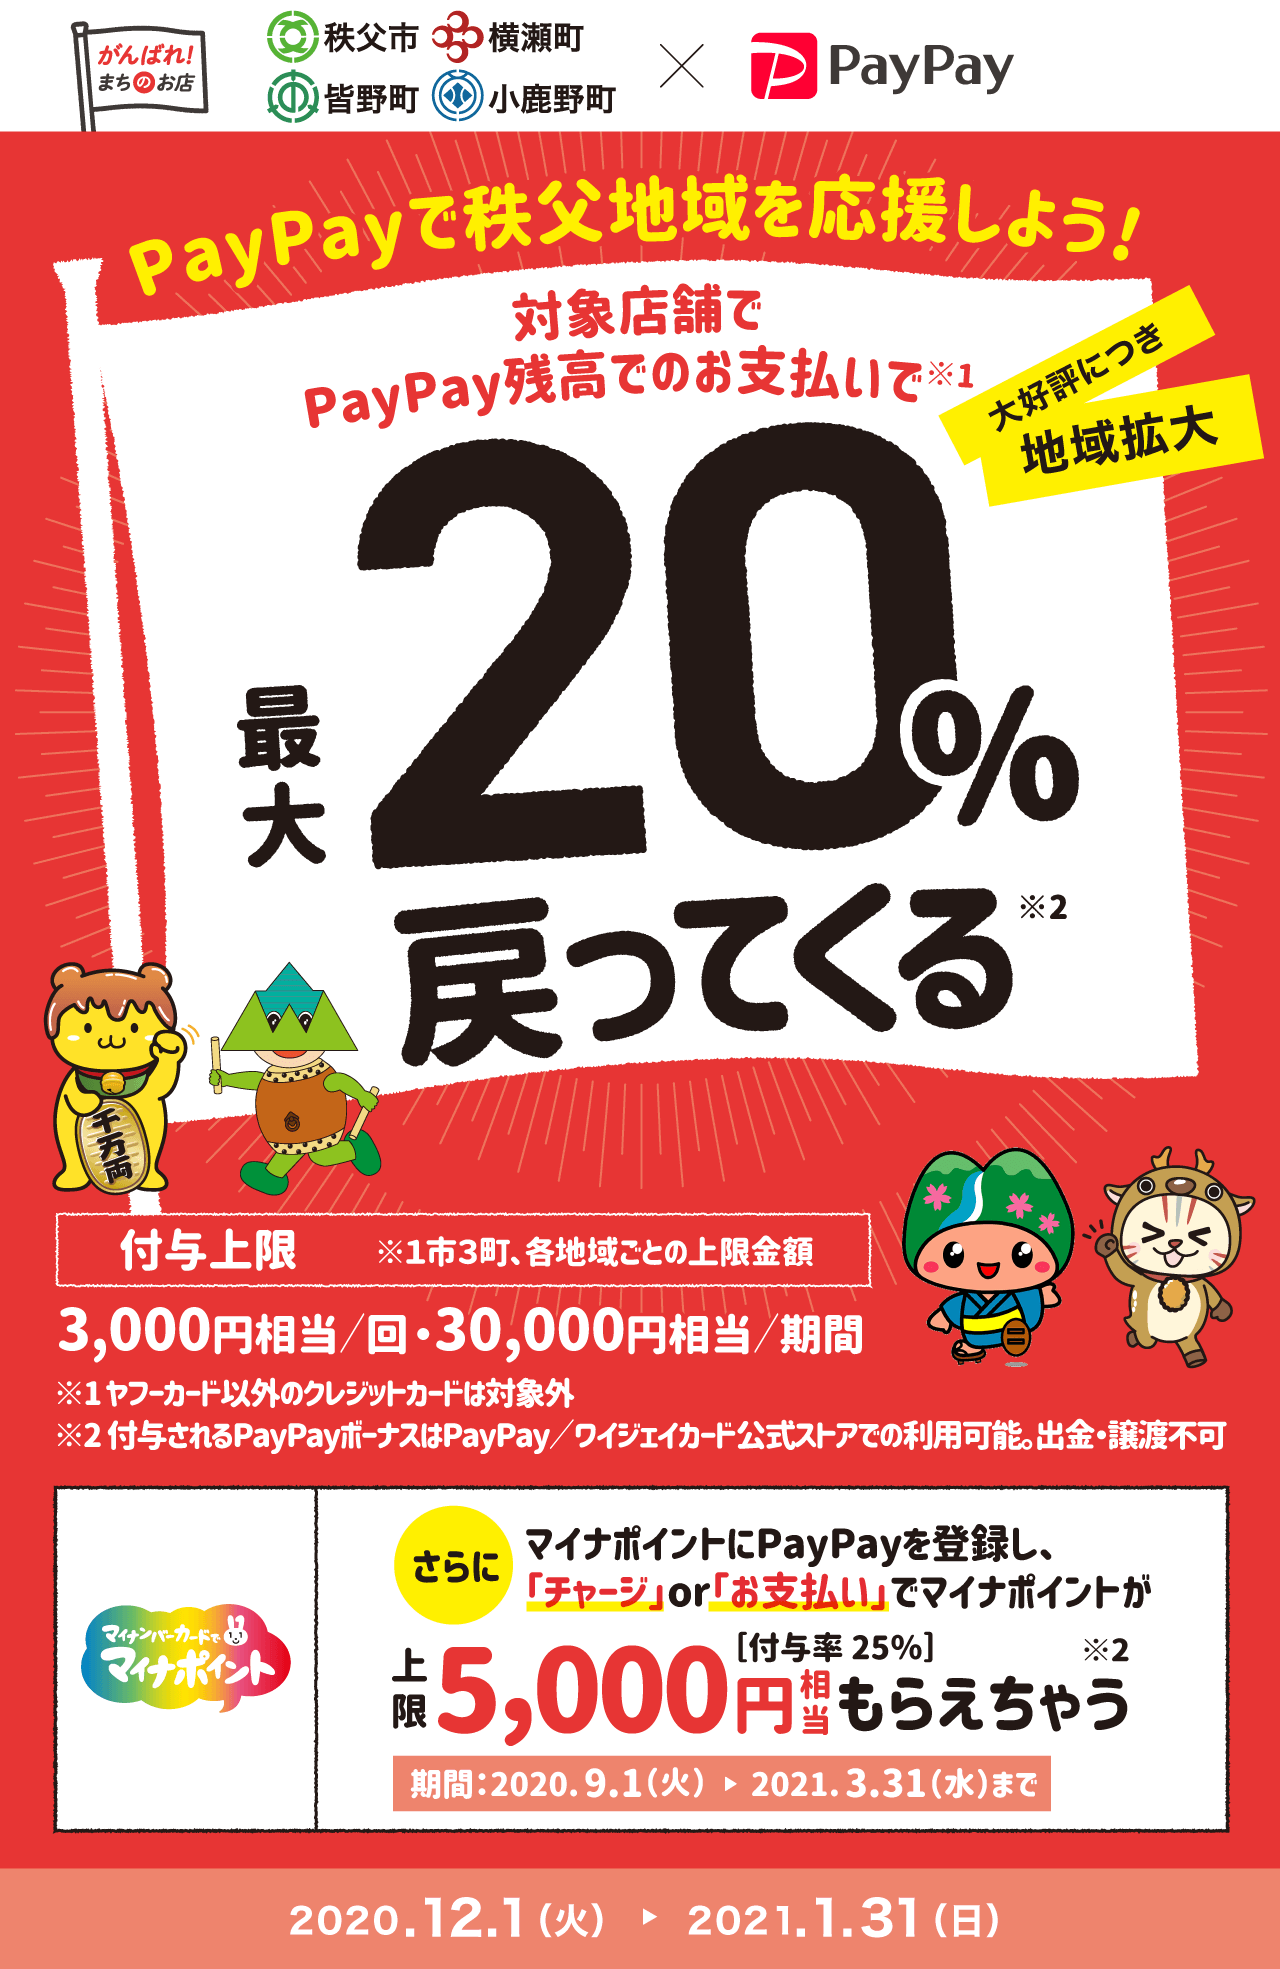 PayPay20%還元キャンペーン